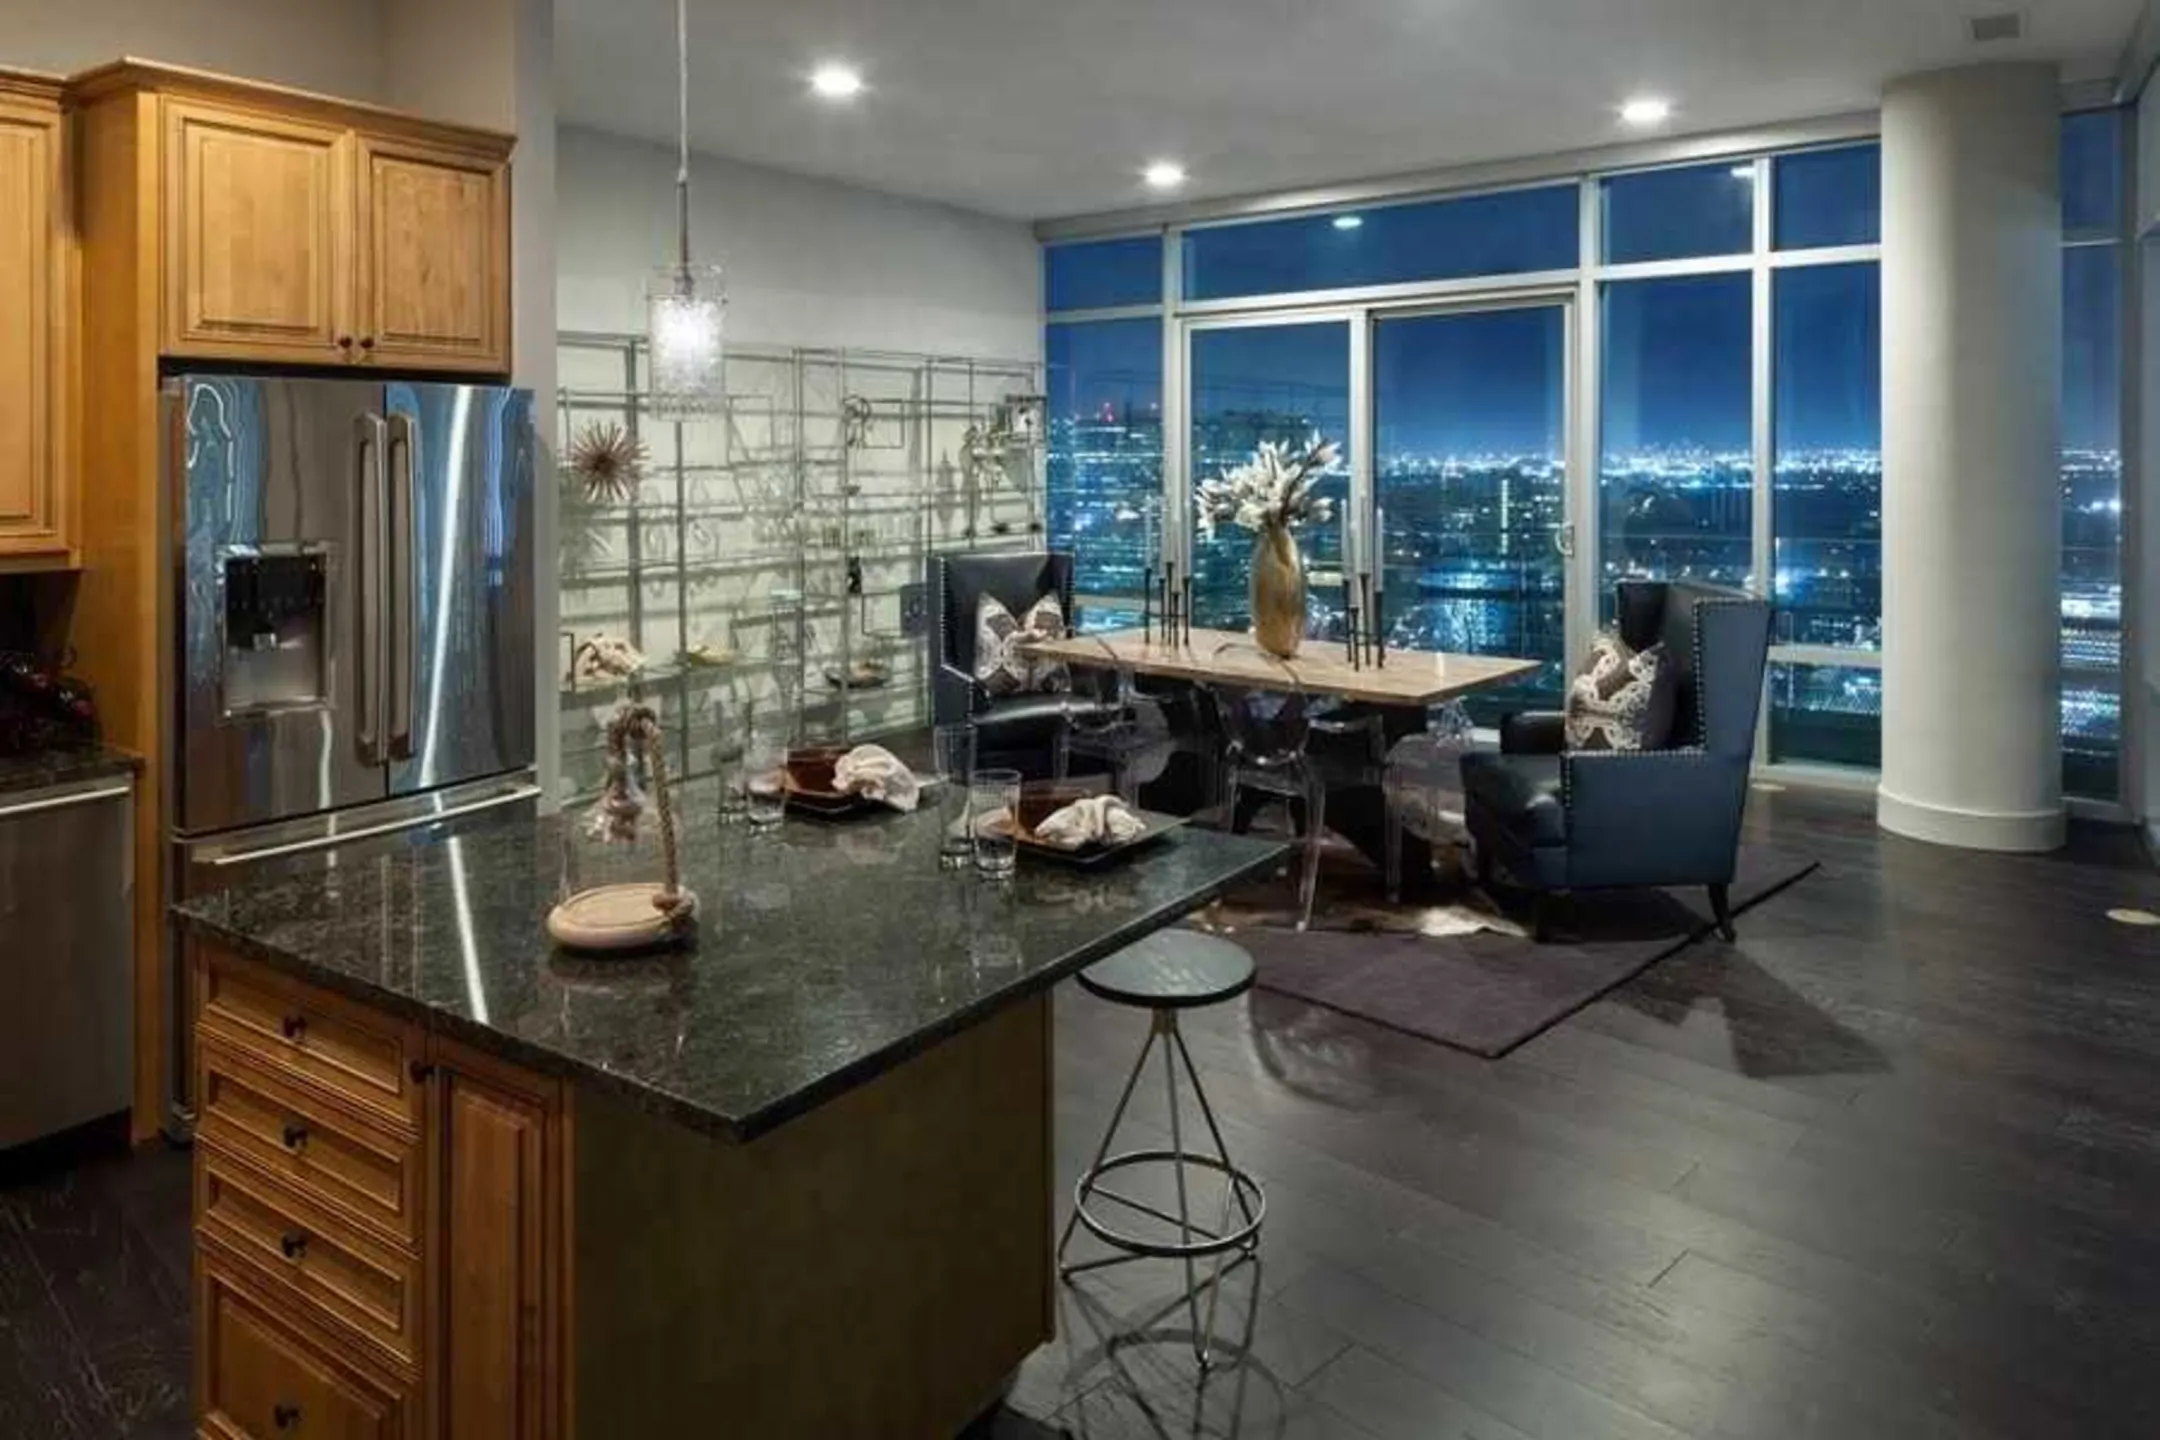 Living Room - 77098 Luxury Properties - Houston, TX